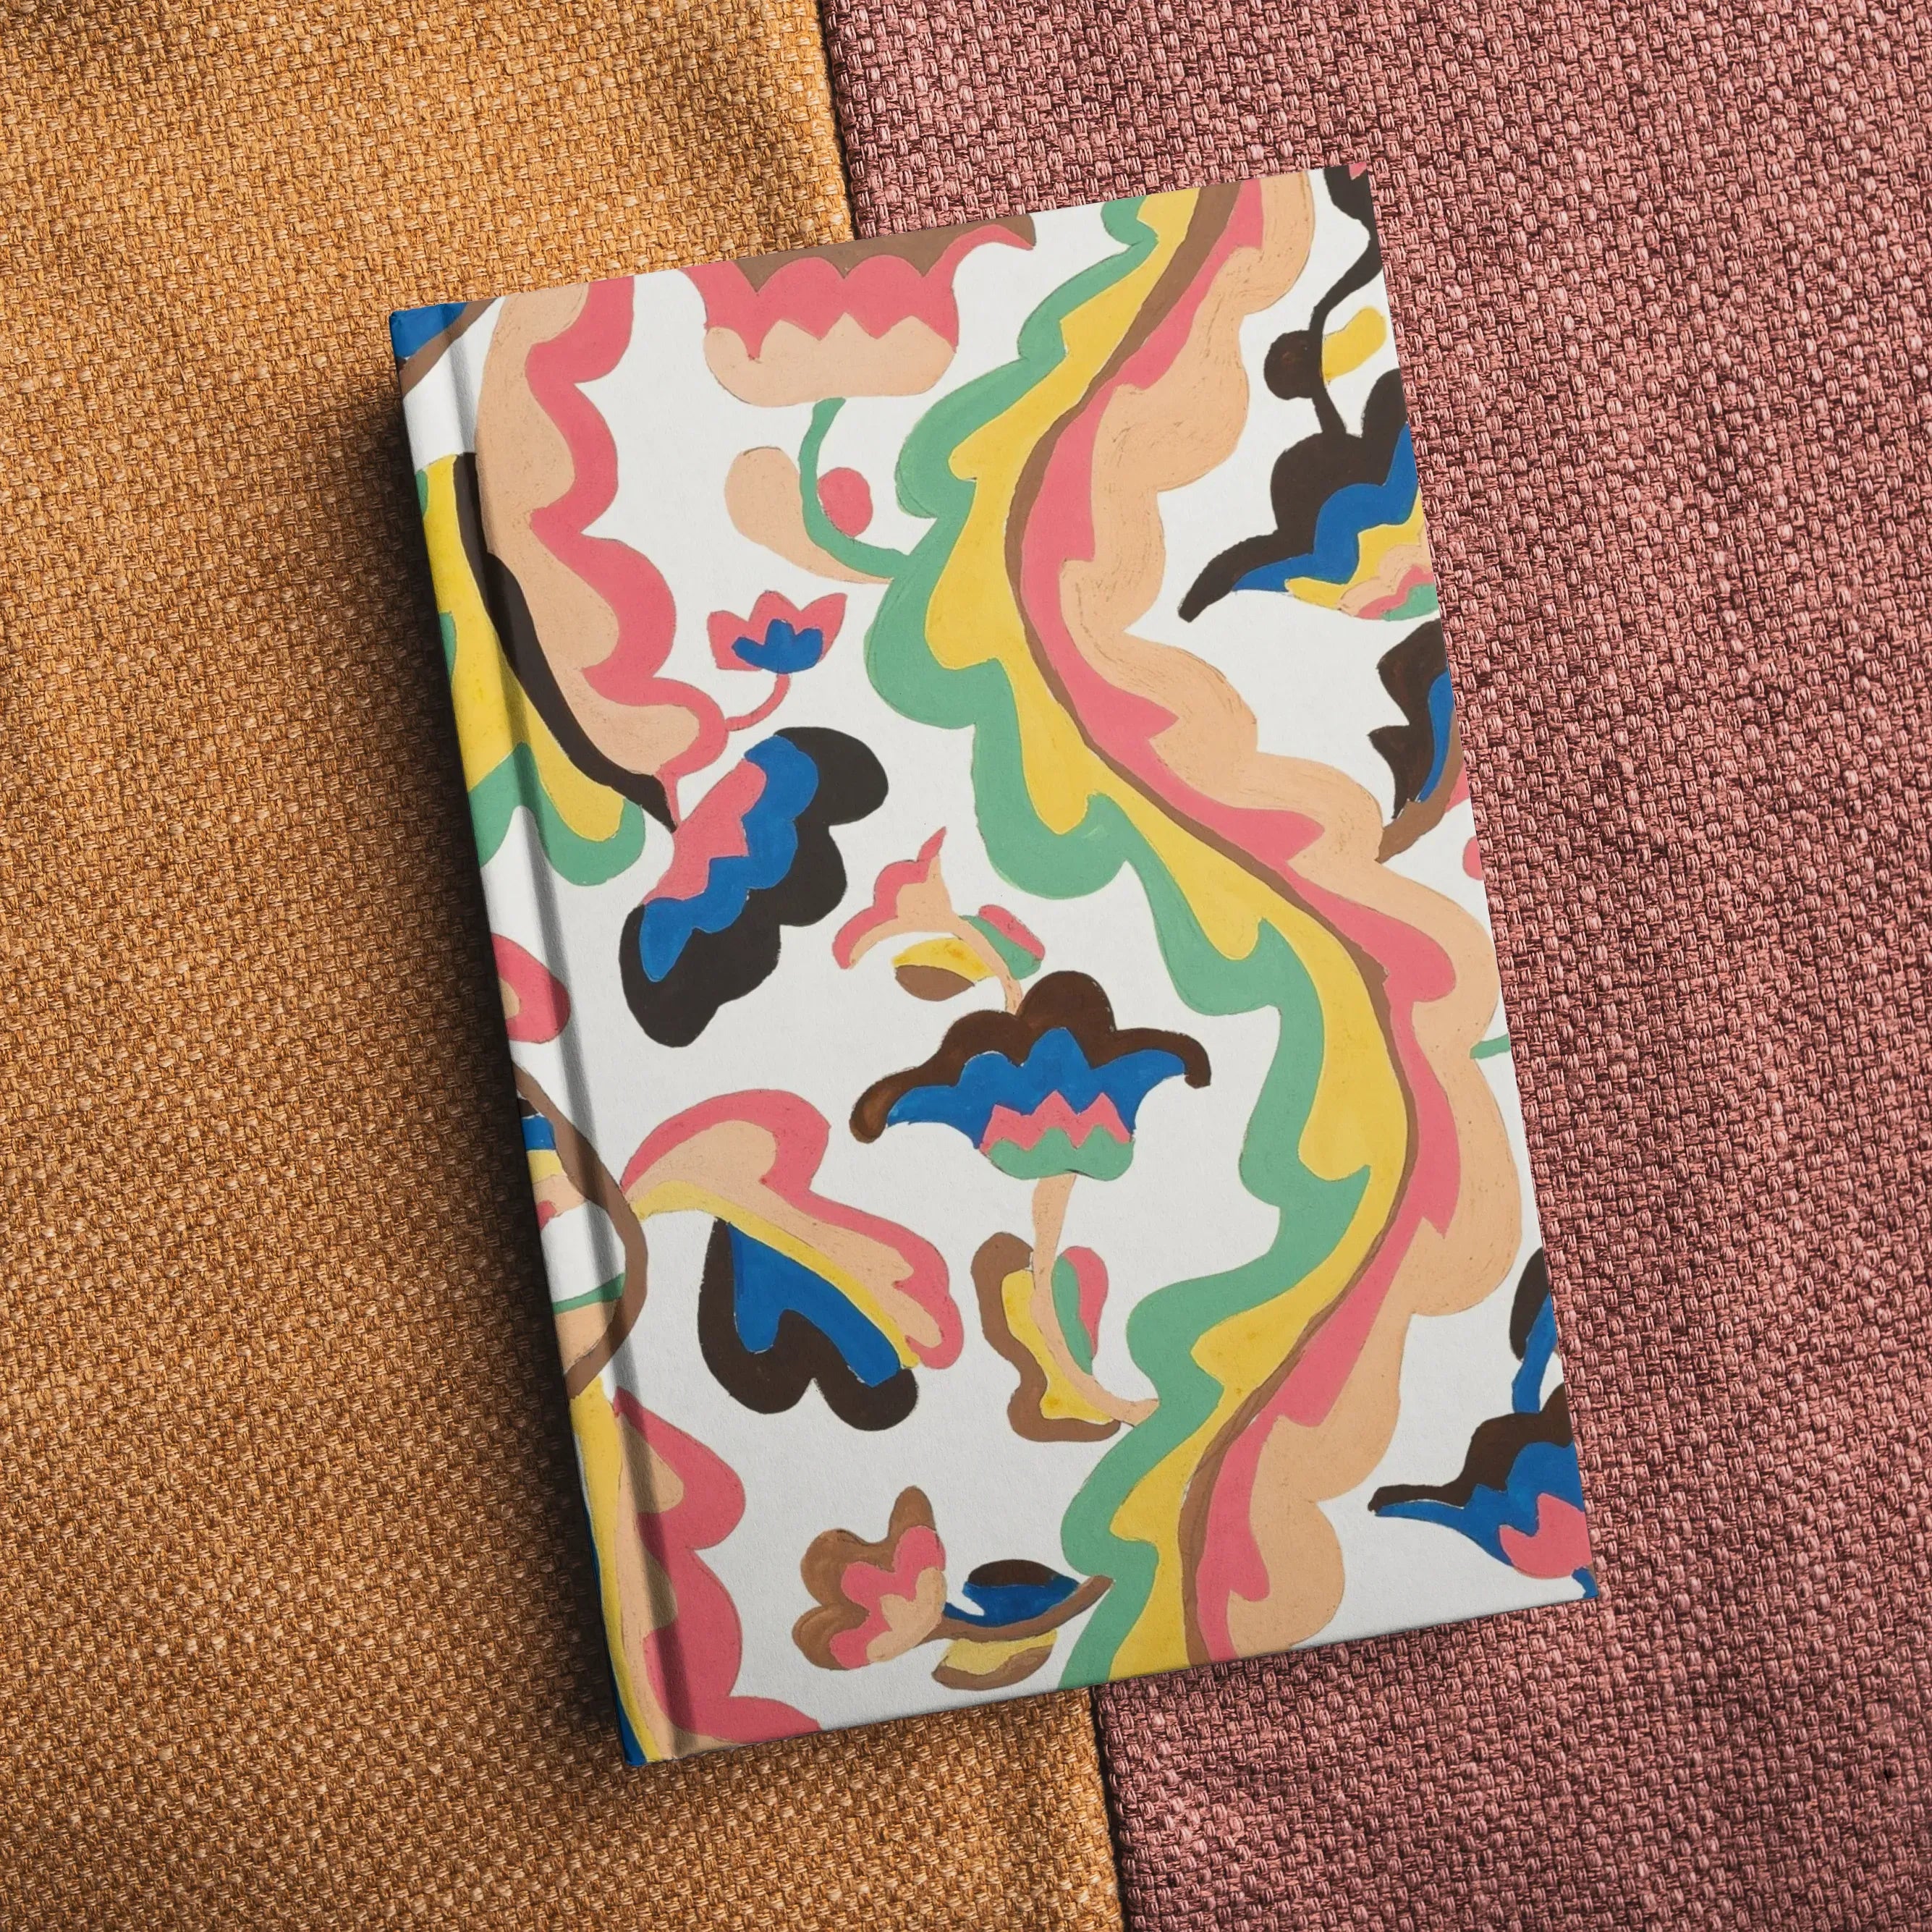 Colcha - Etna Wiswall Hardback Journal - Notebooks & Notepads - Aesthetic Art